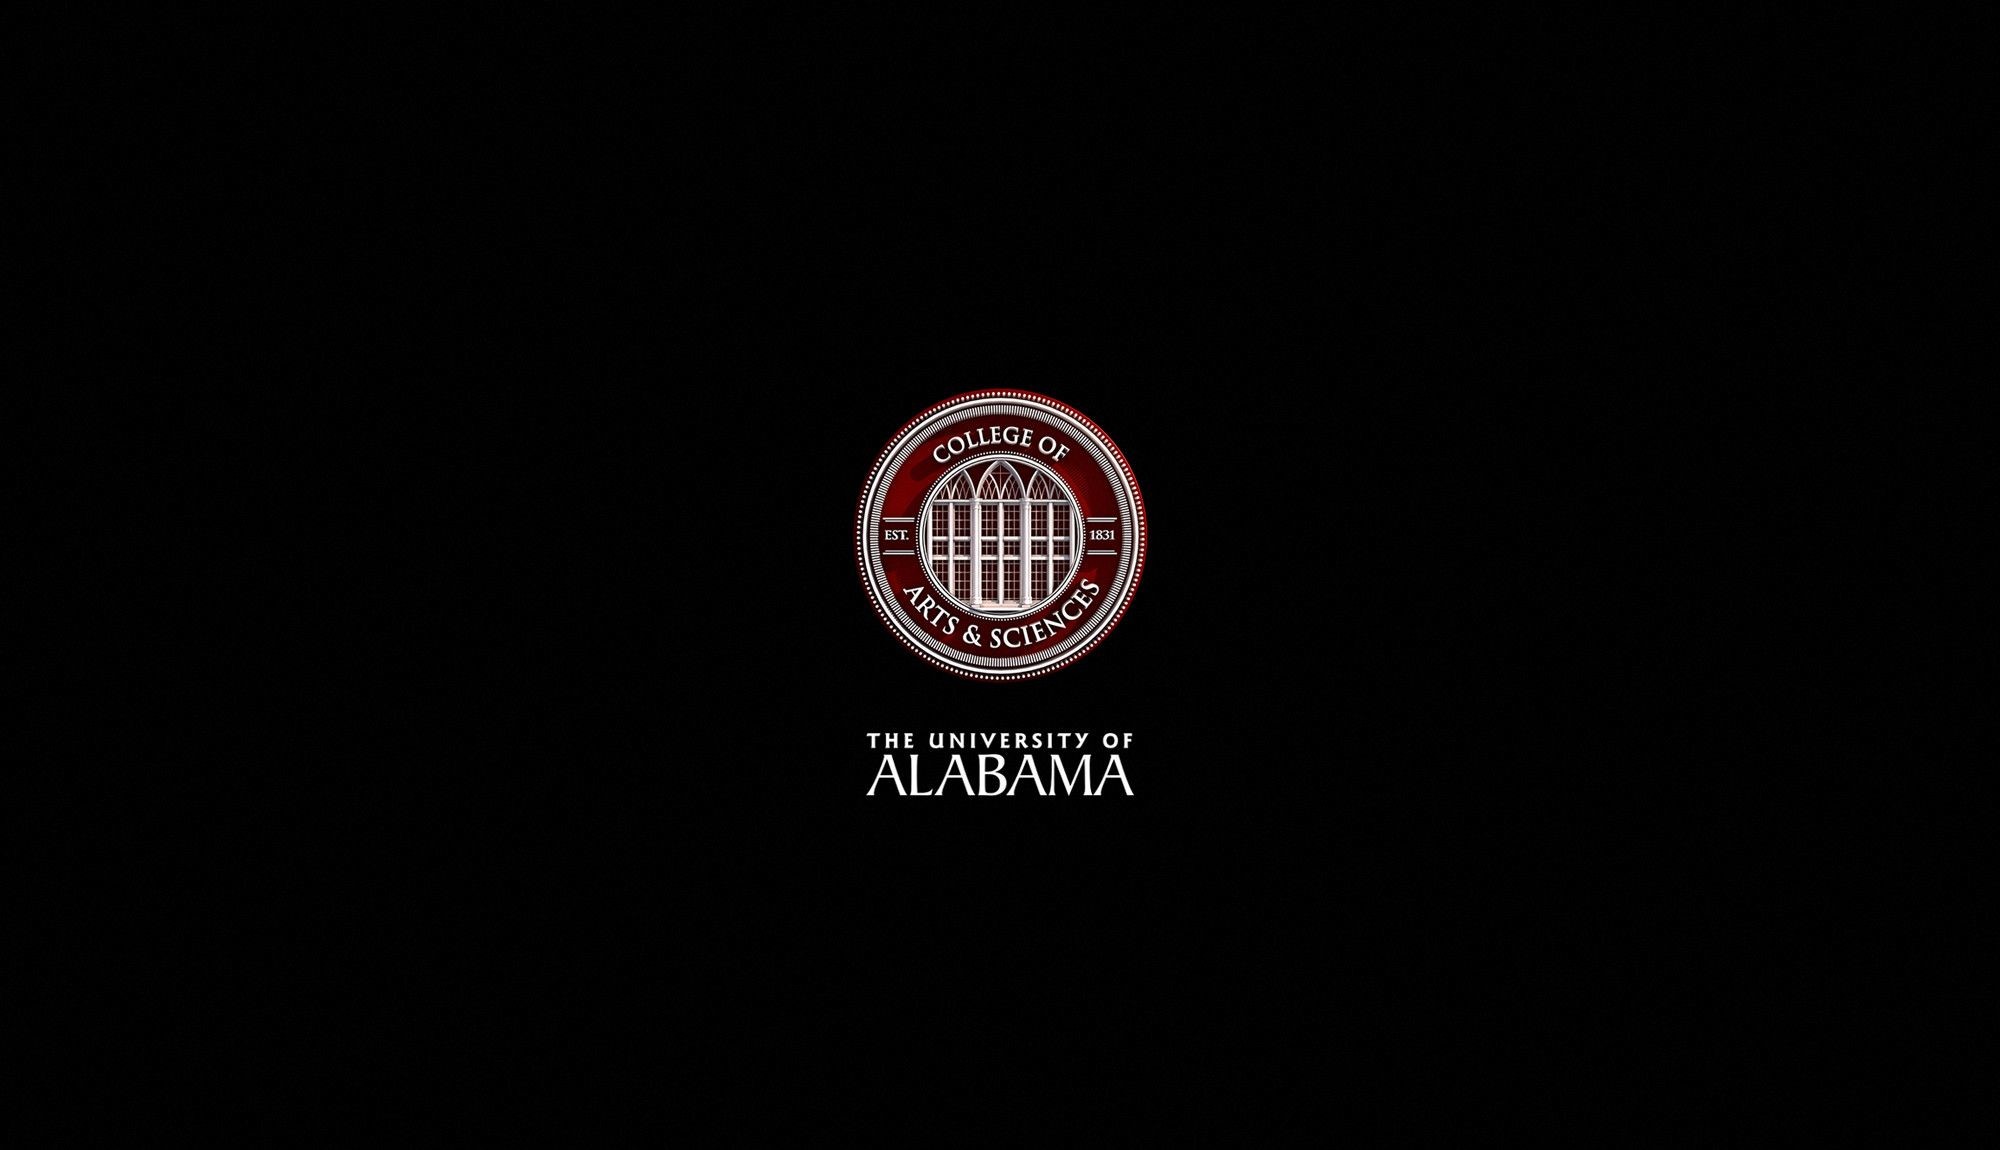 University Of Alabama Wallpaper Image